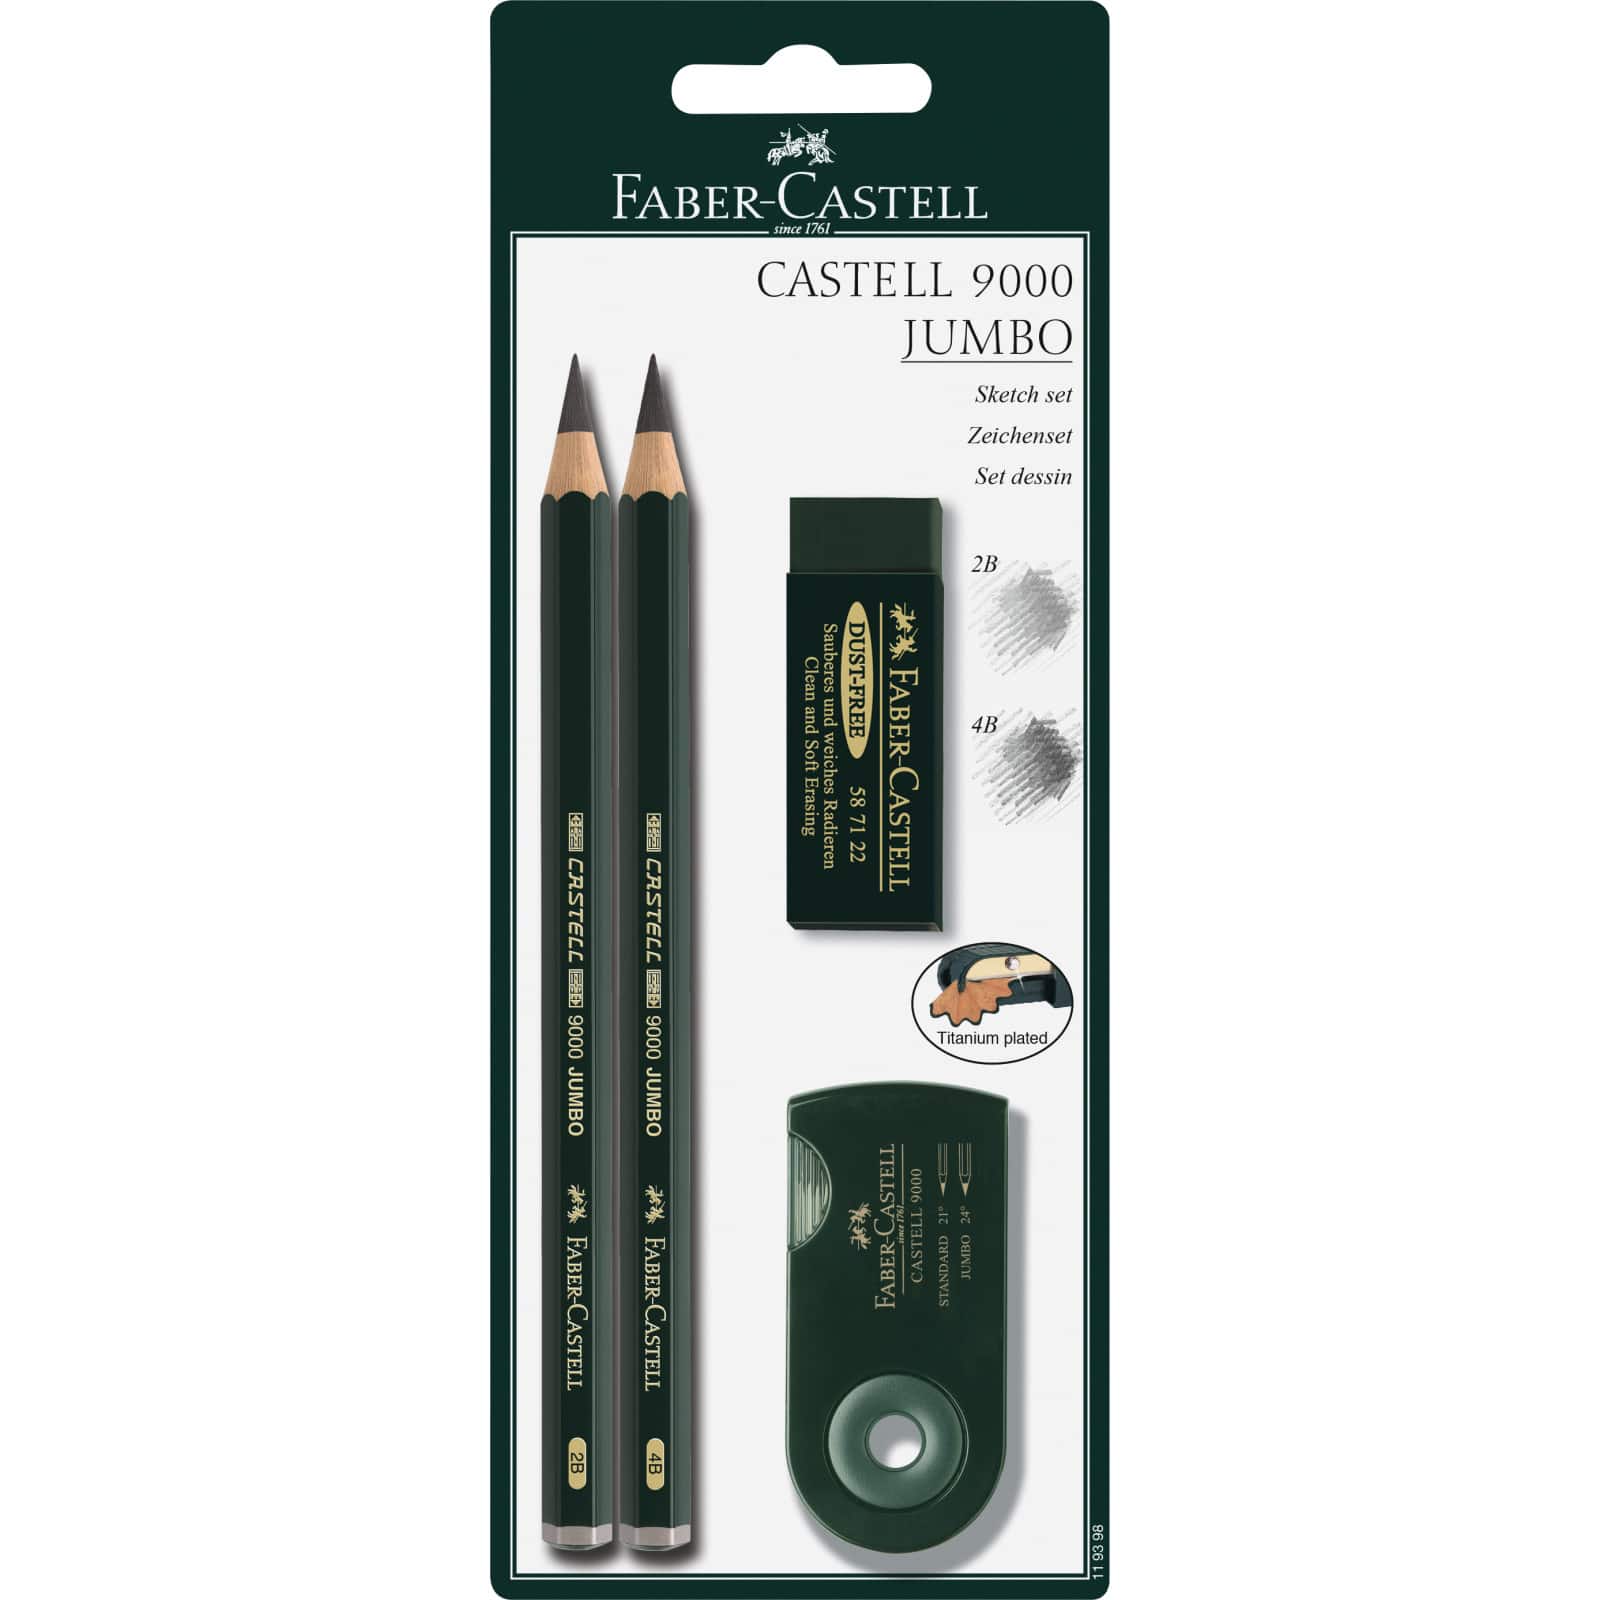 Faber-Castell 9000 Jumbo Graphite Pencil Sketch Set